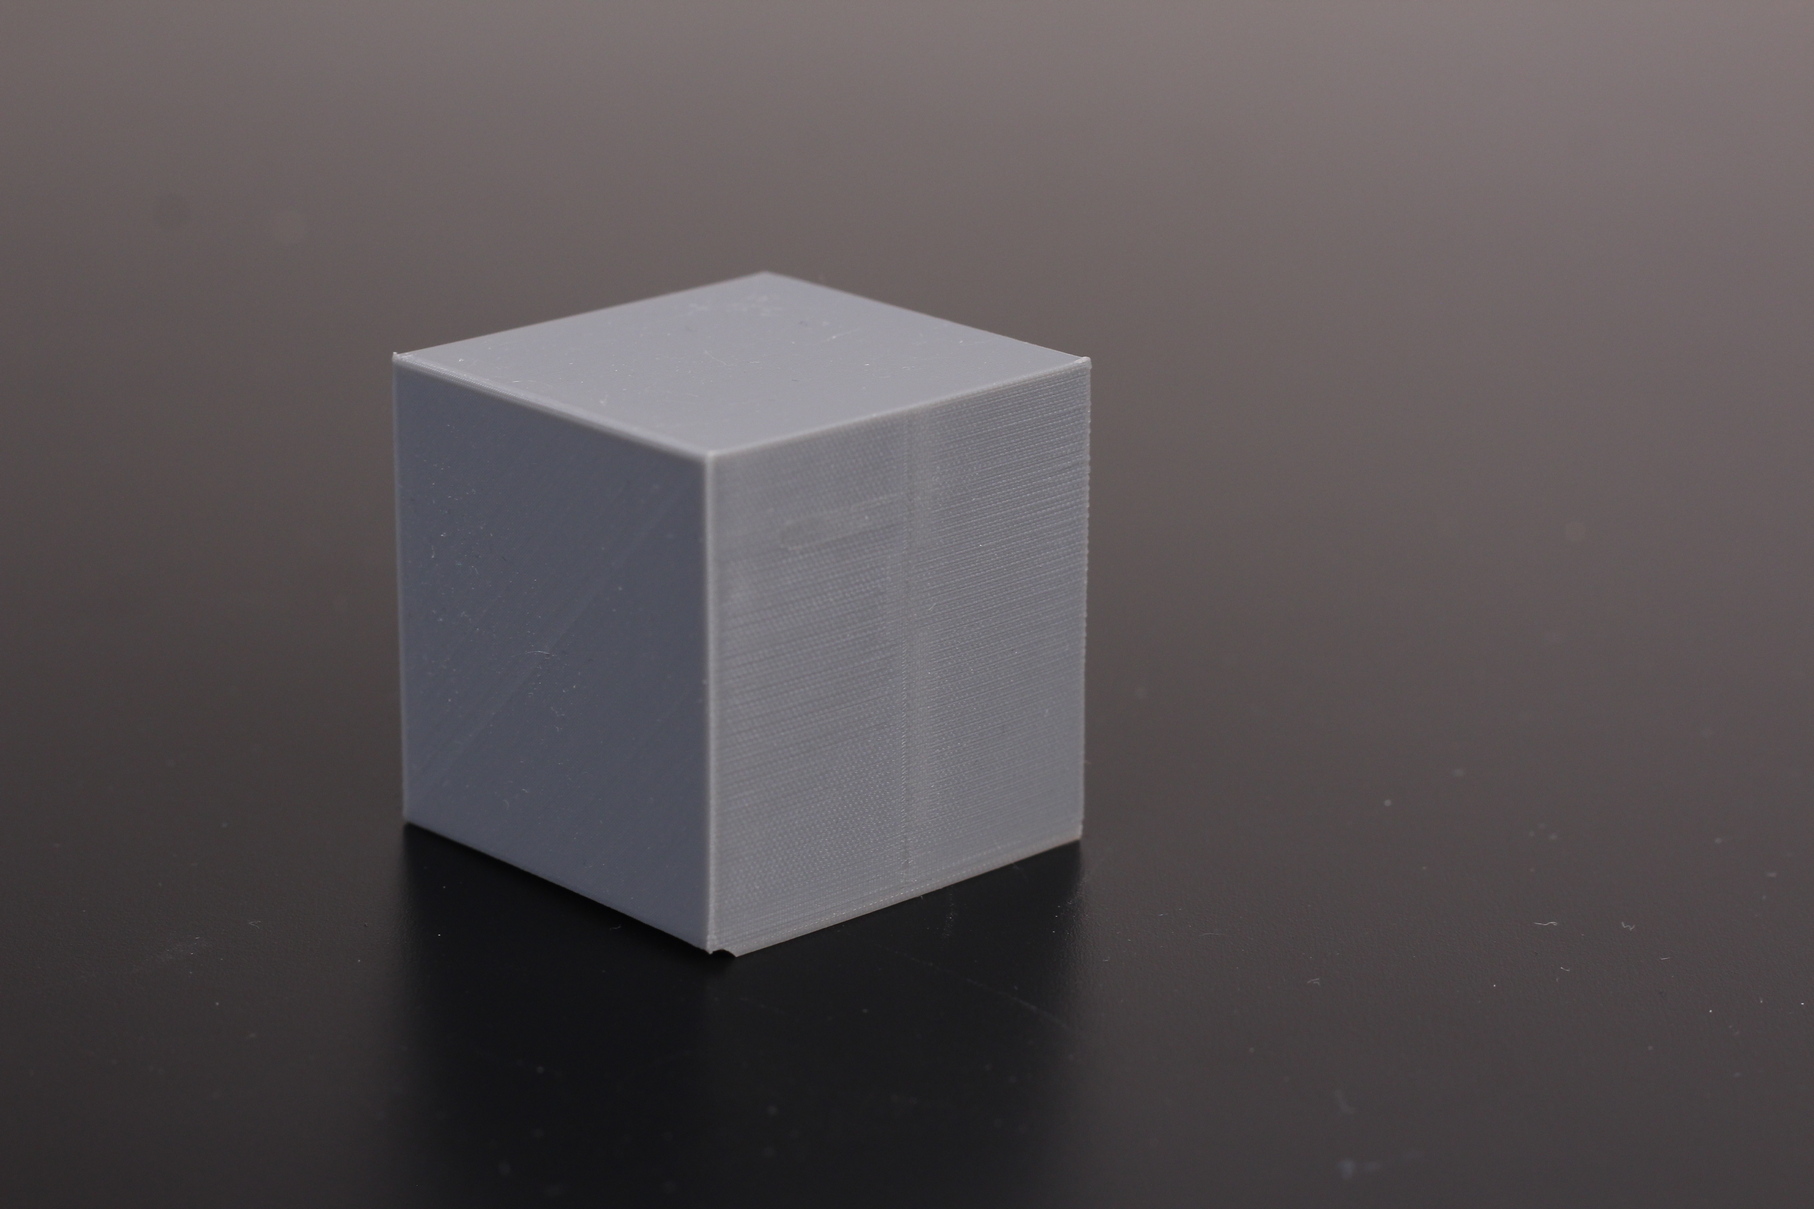 40x40 cube 2 | Creality 3DPrintMill (CR-30) Review: Belt Printer for Batch 3D Printing